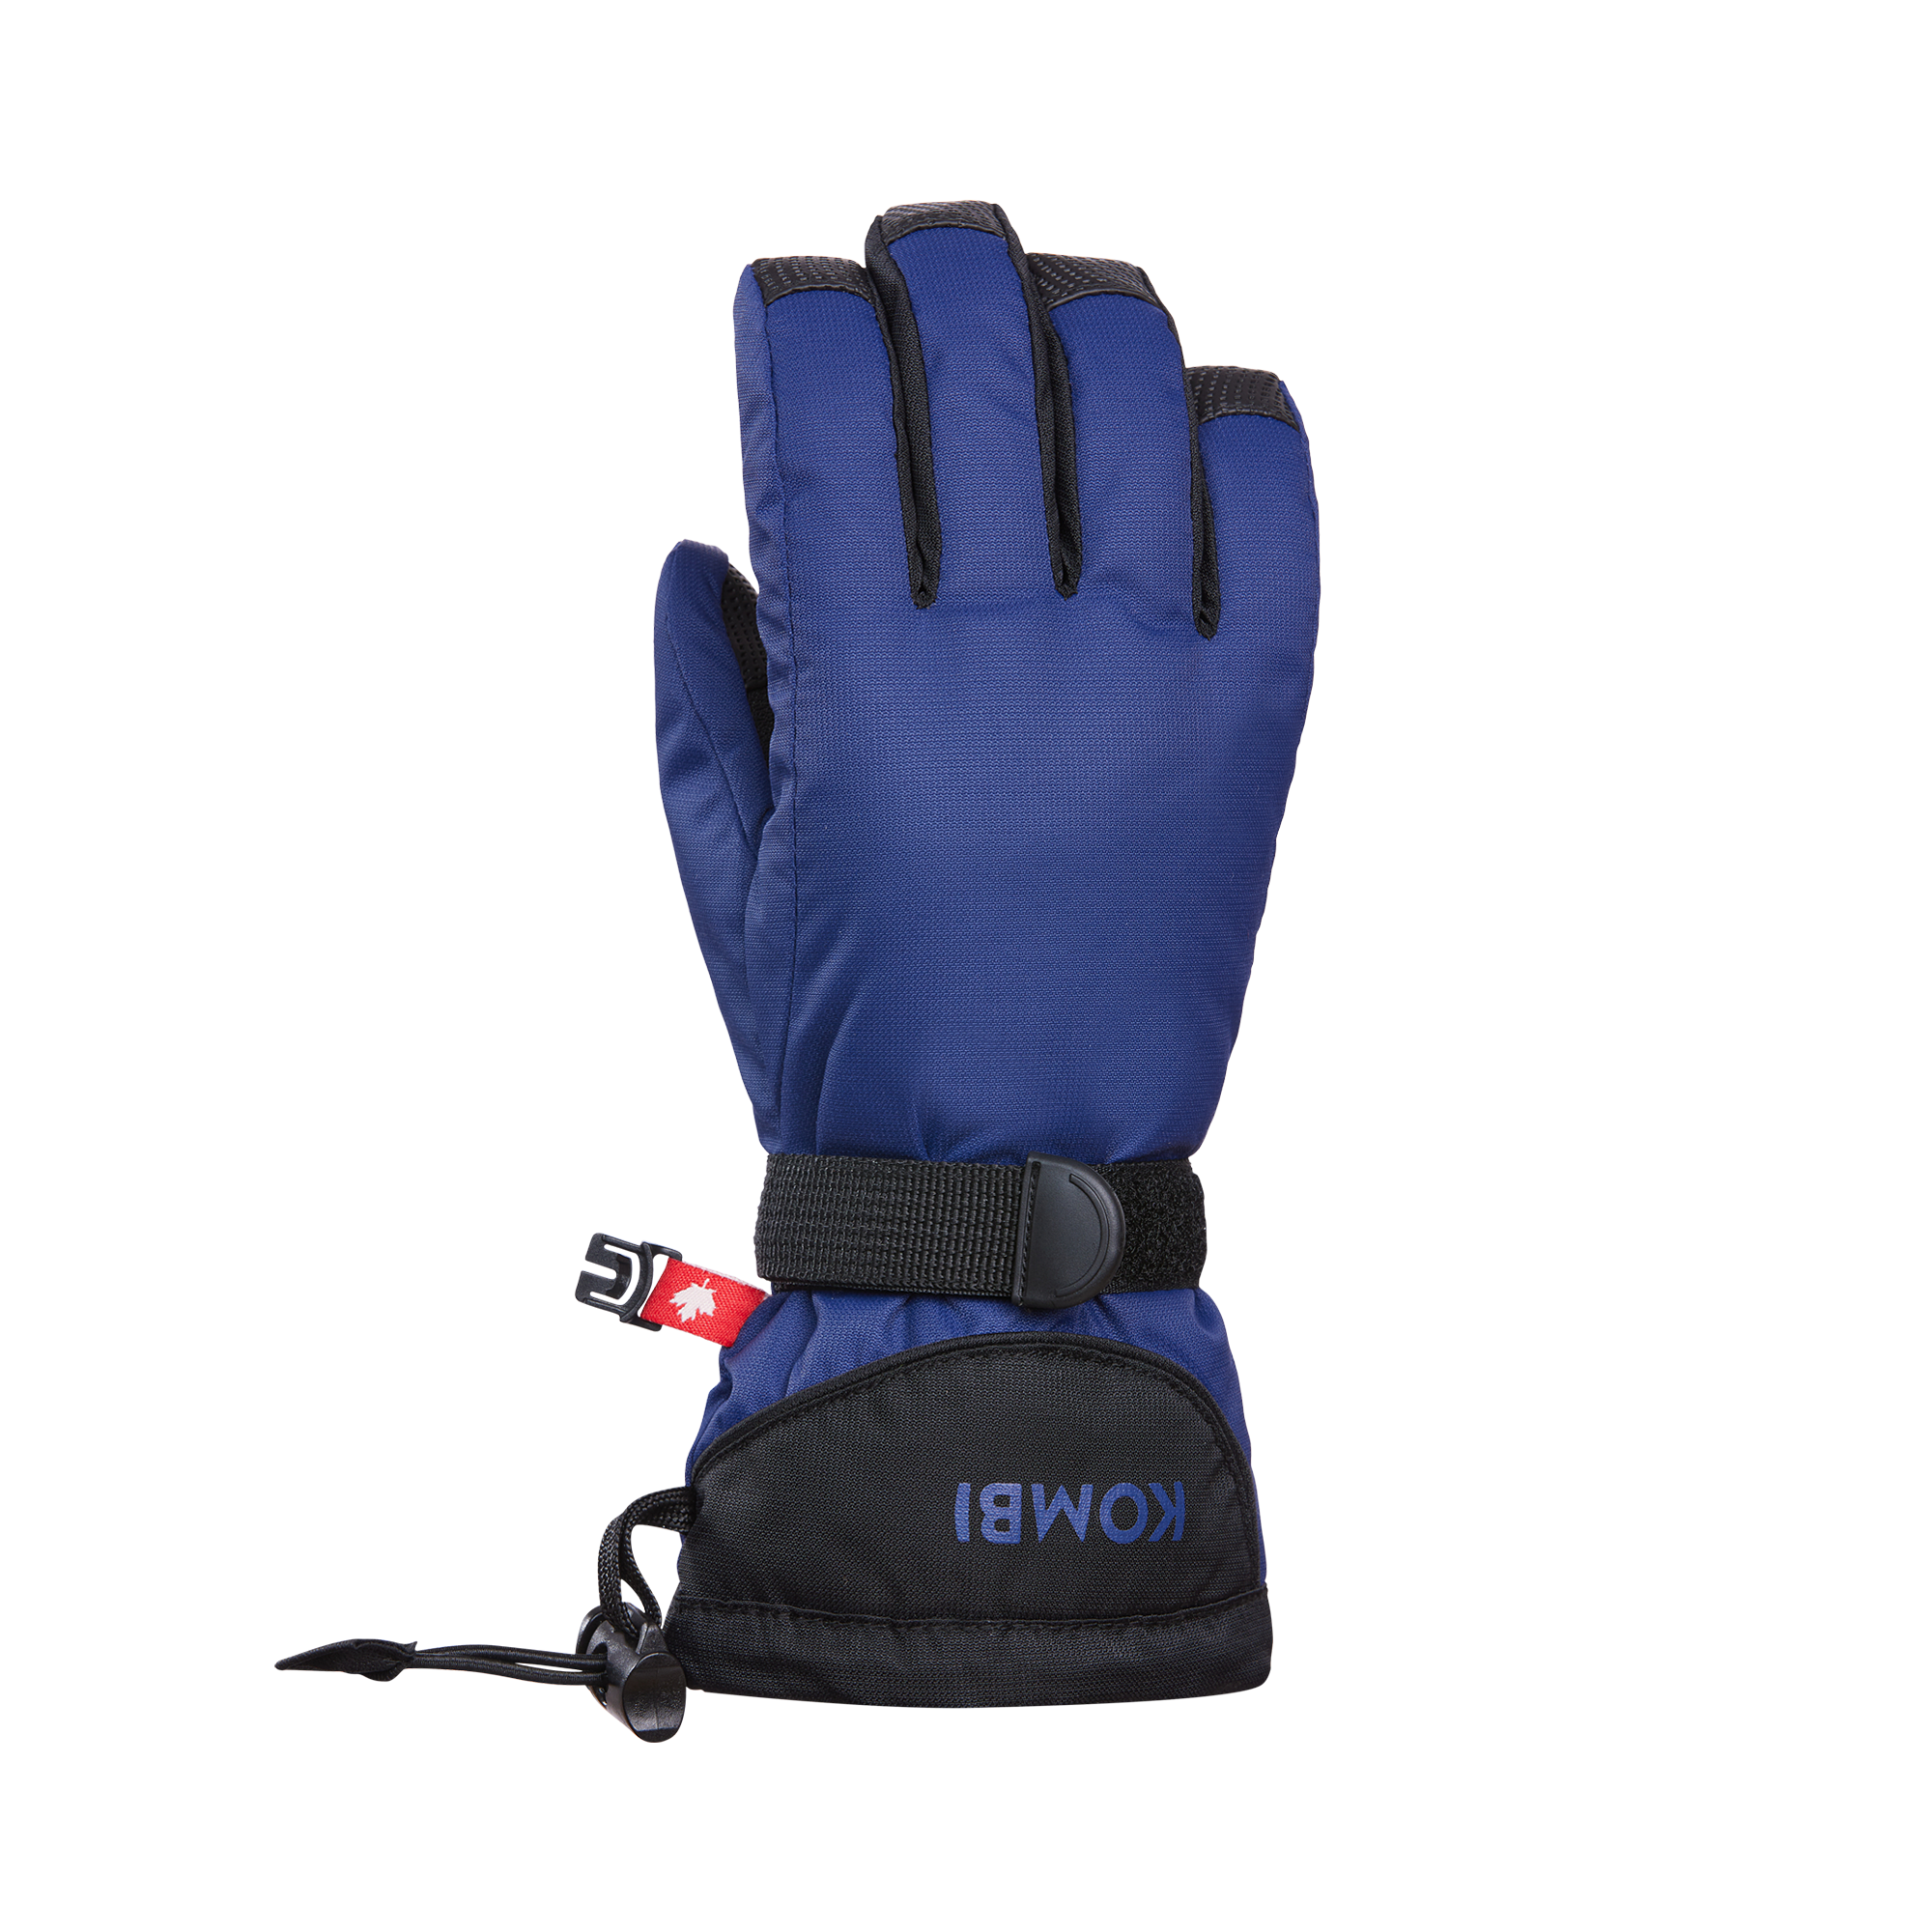 Kombi - The Everyday Junior Gloves